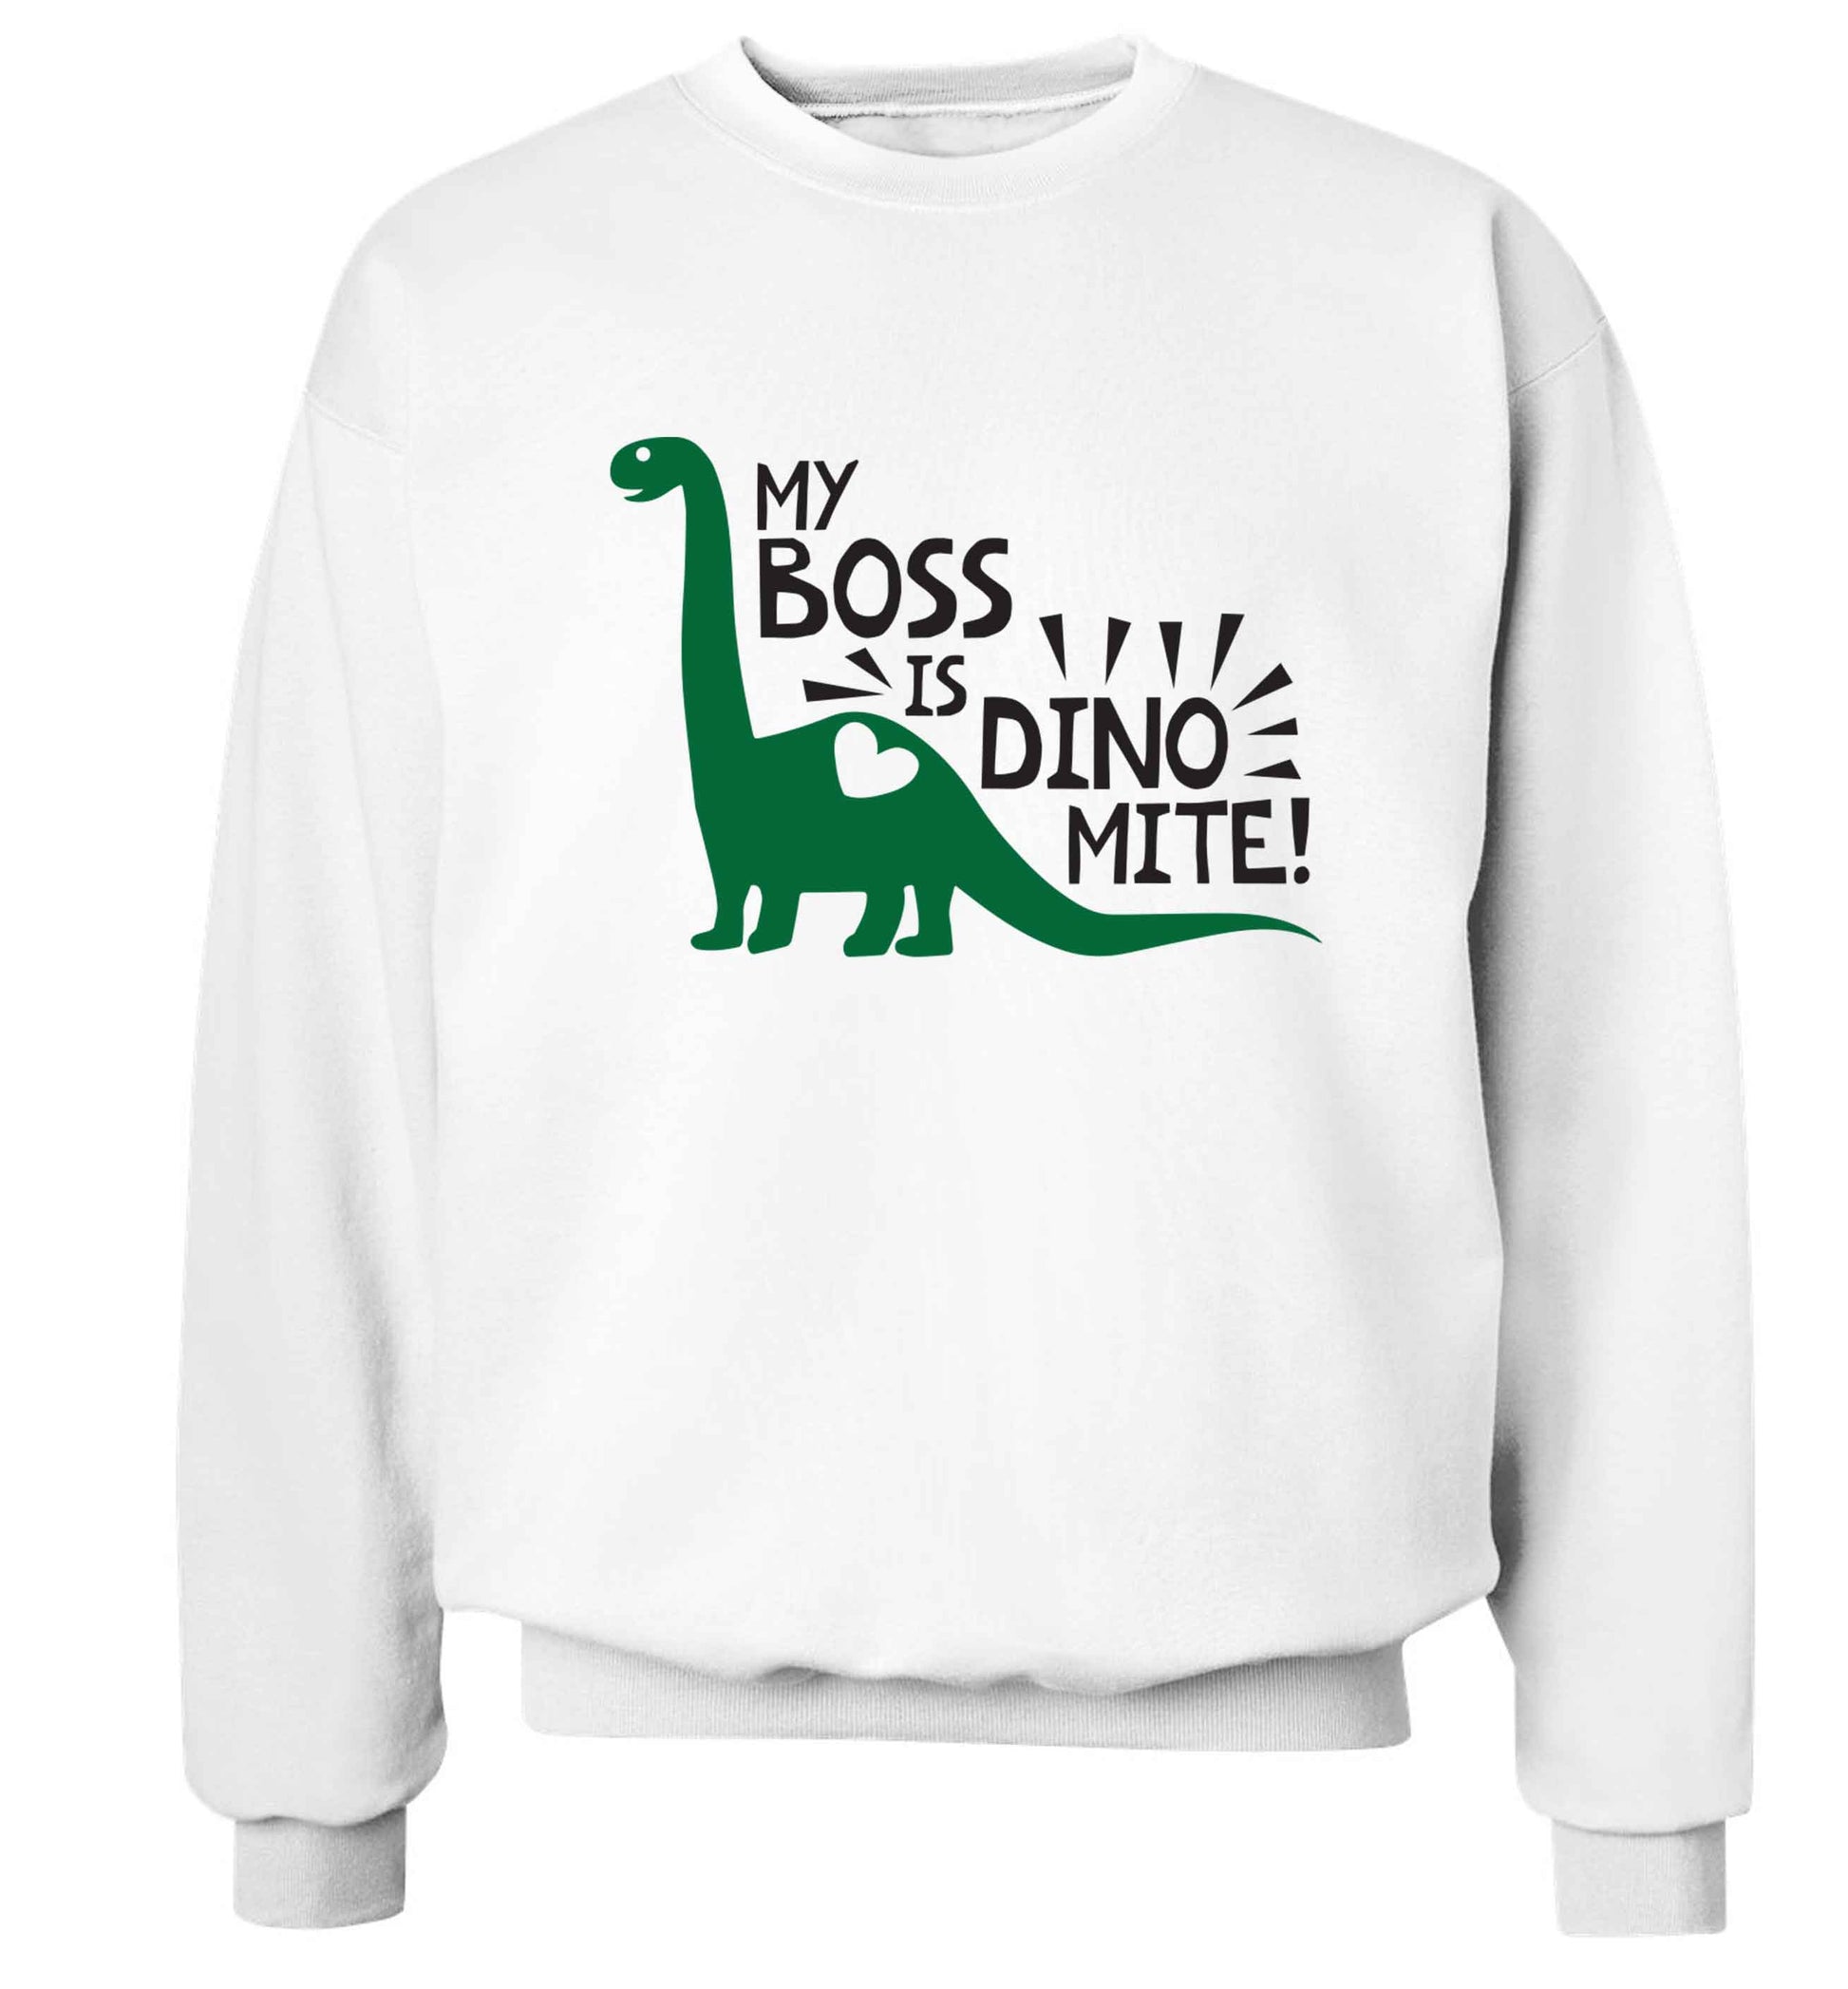 My boss is dinomite! Adult's unisex white Sweater 2XL